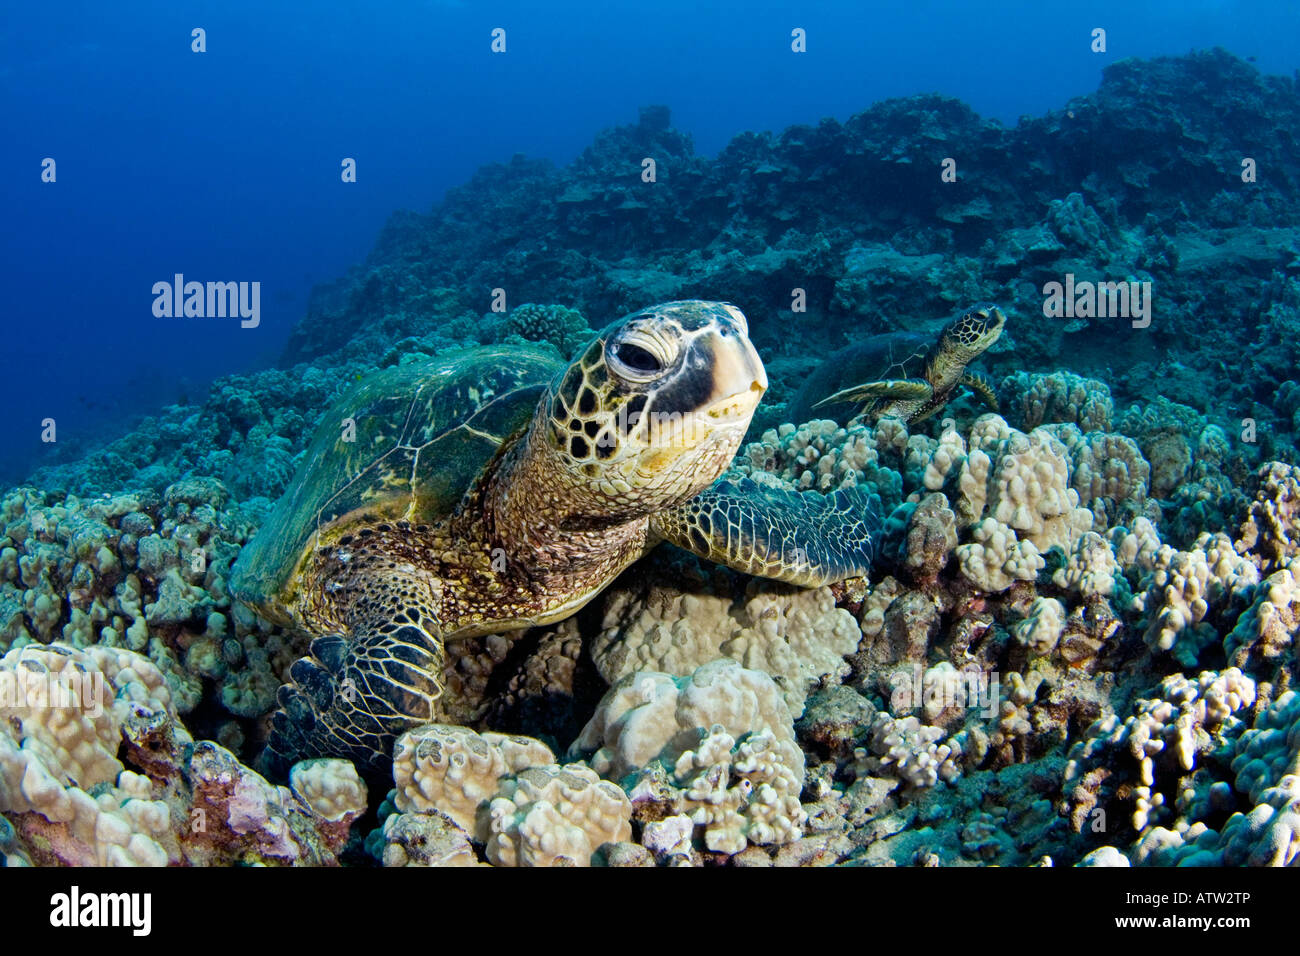 Green sea turtles, Chelonia mydas, an endangered species, resting on a Hawaiian reef. Stock Photo